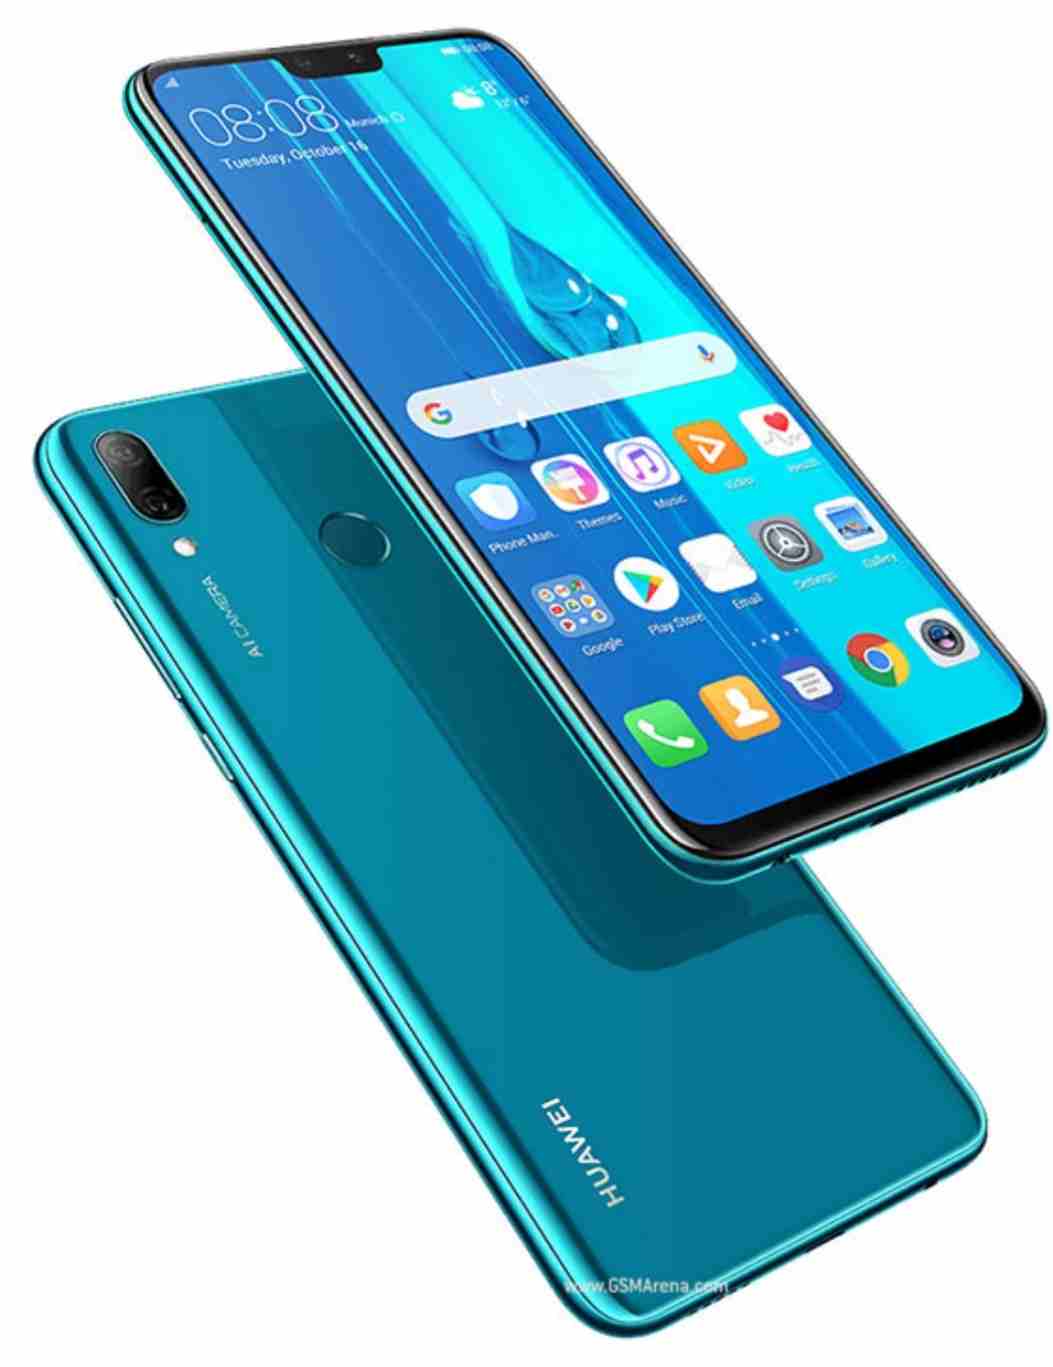 SELLING ORIGINAL MOBILE PHONES AND ELECTRONICS IN STOREBUY 5 UNIT OF MOBILE PHONES AND GET 2 UNIT FOR FREEBUY 2 UNIT OF MOBILE PHONES AND GET 1 UNIT FOR FREEAPP-  Huawei y9 2019 جديد لا...